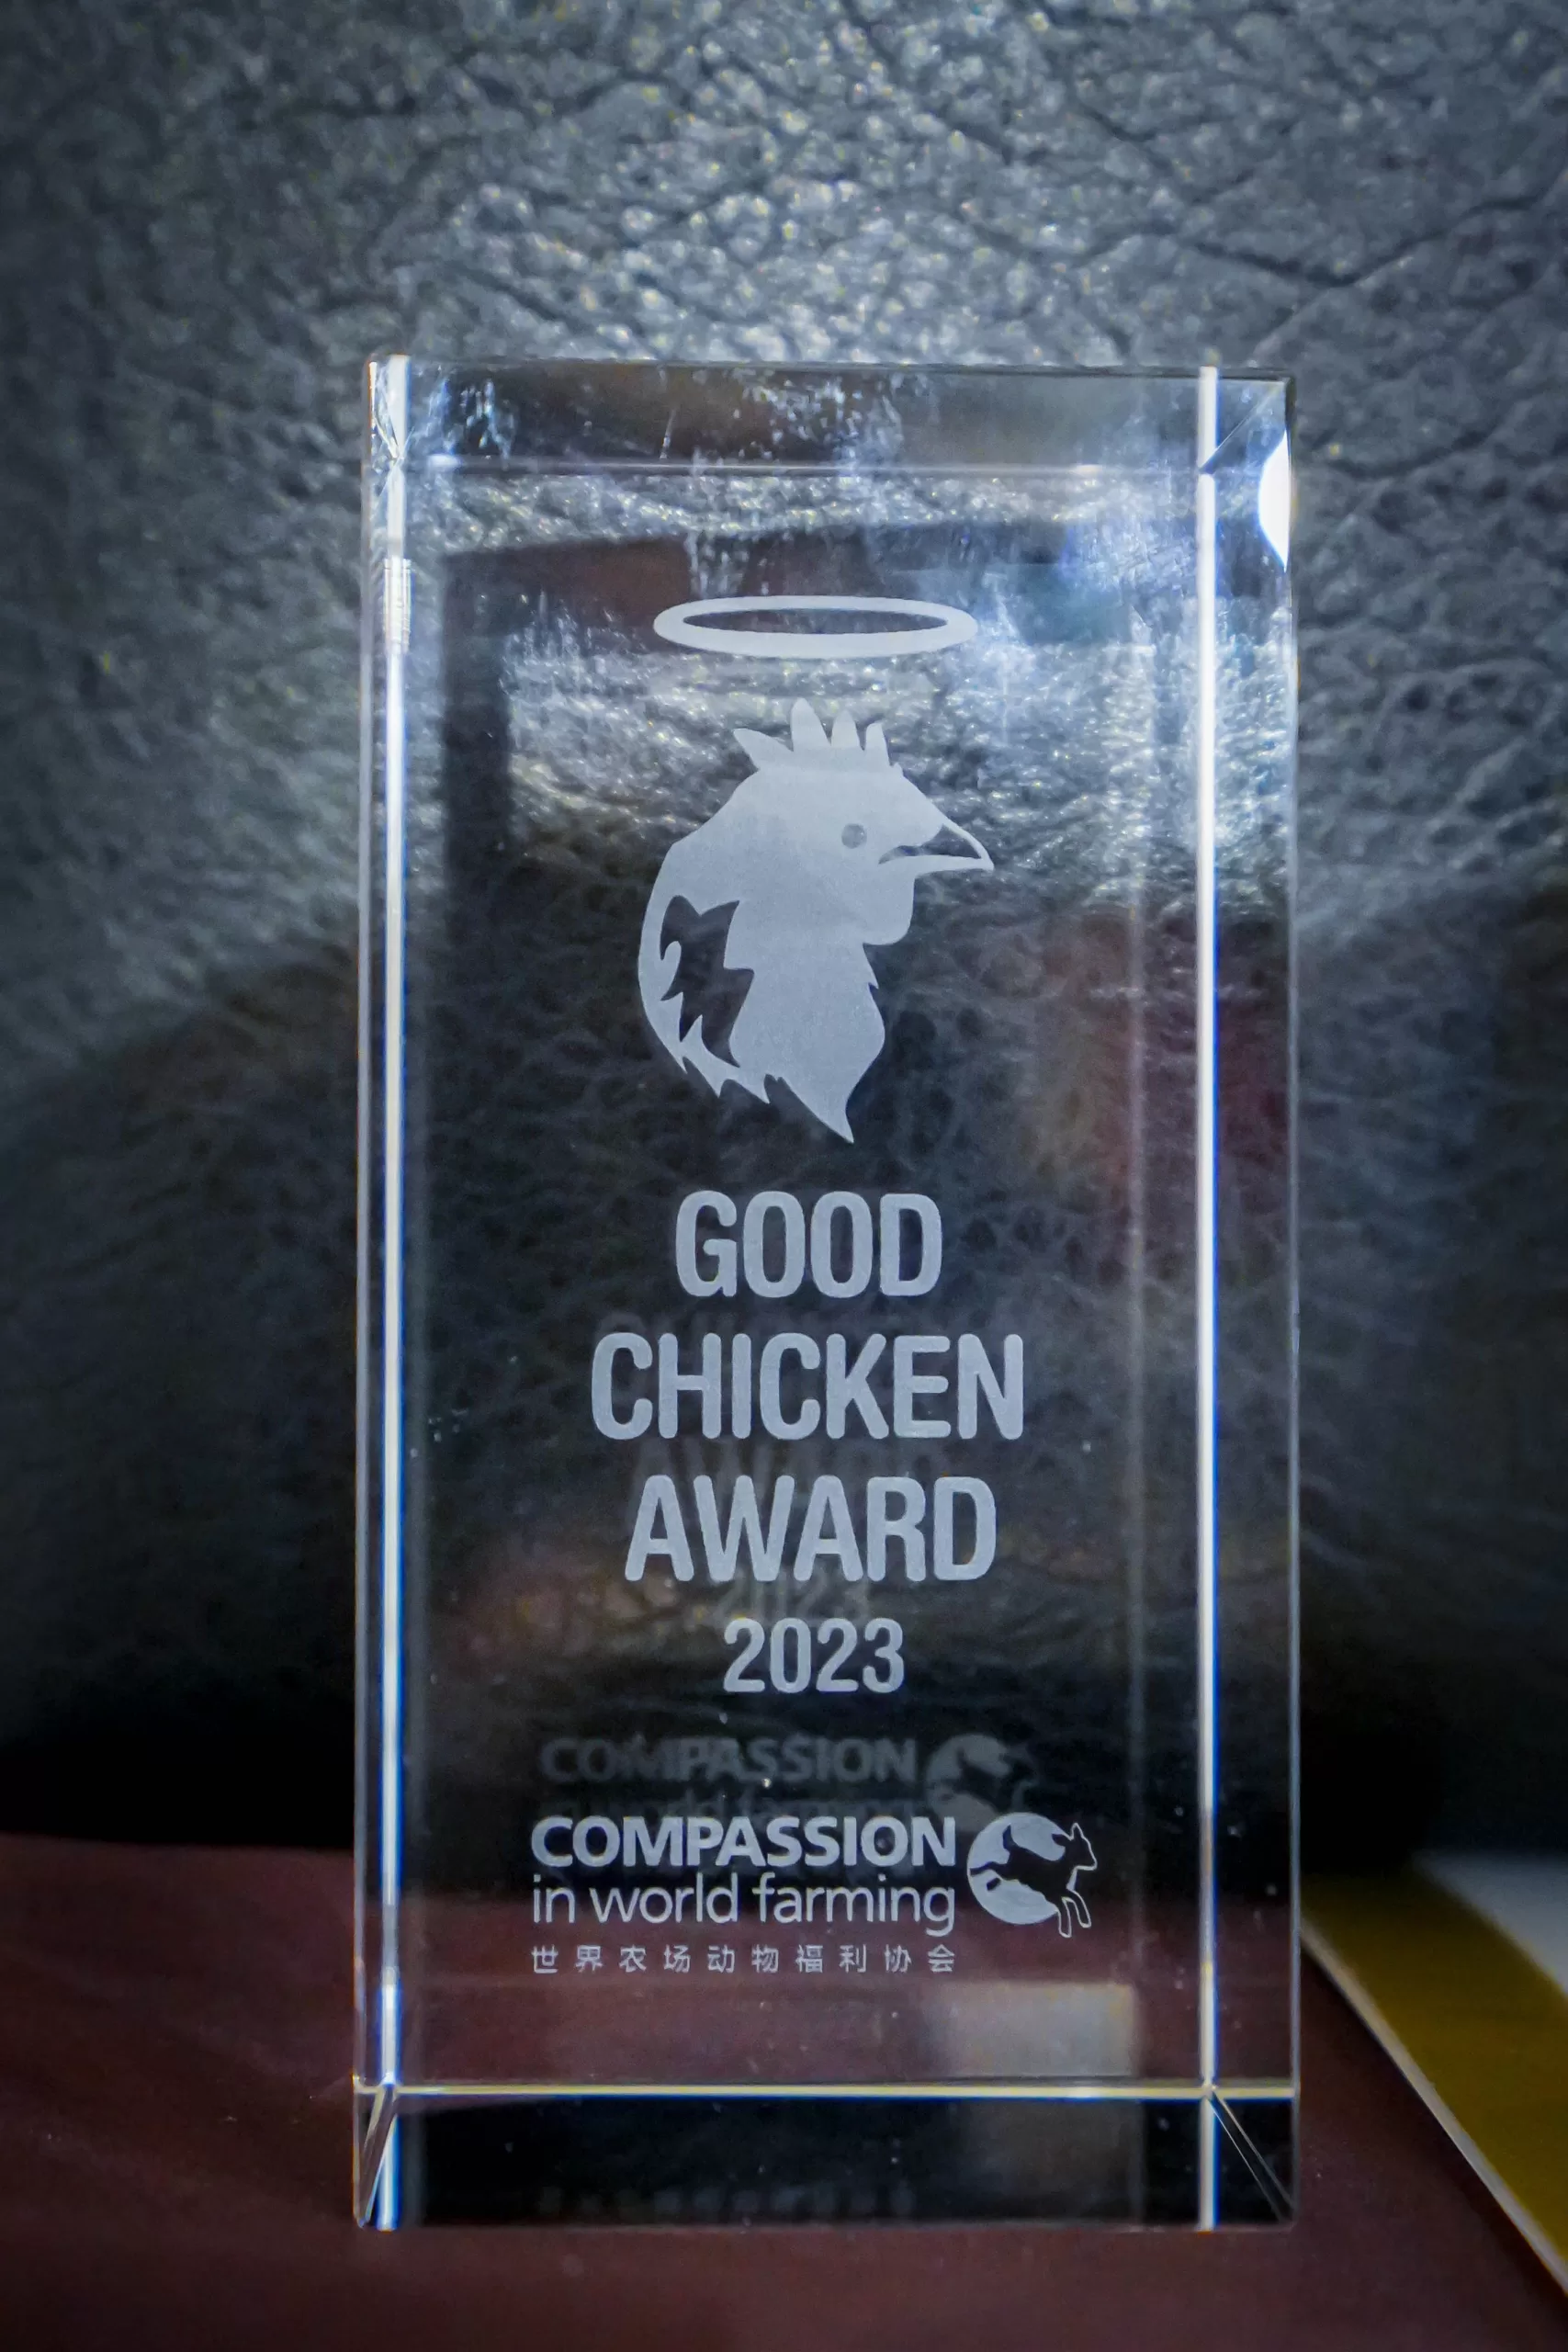 GOOD CHICKEN AWARD 2023 from CIWF - Compassion in World Farming